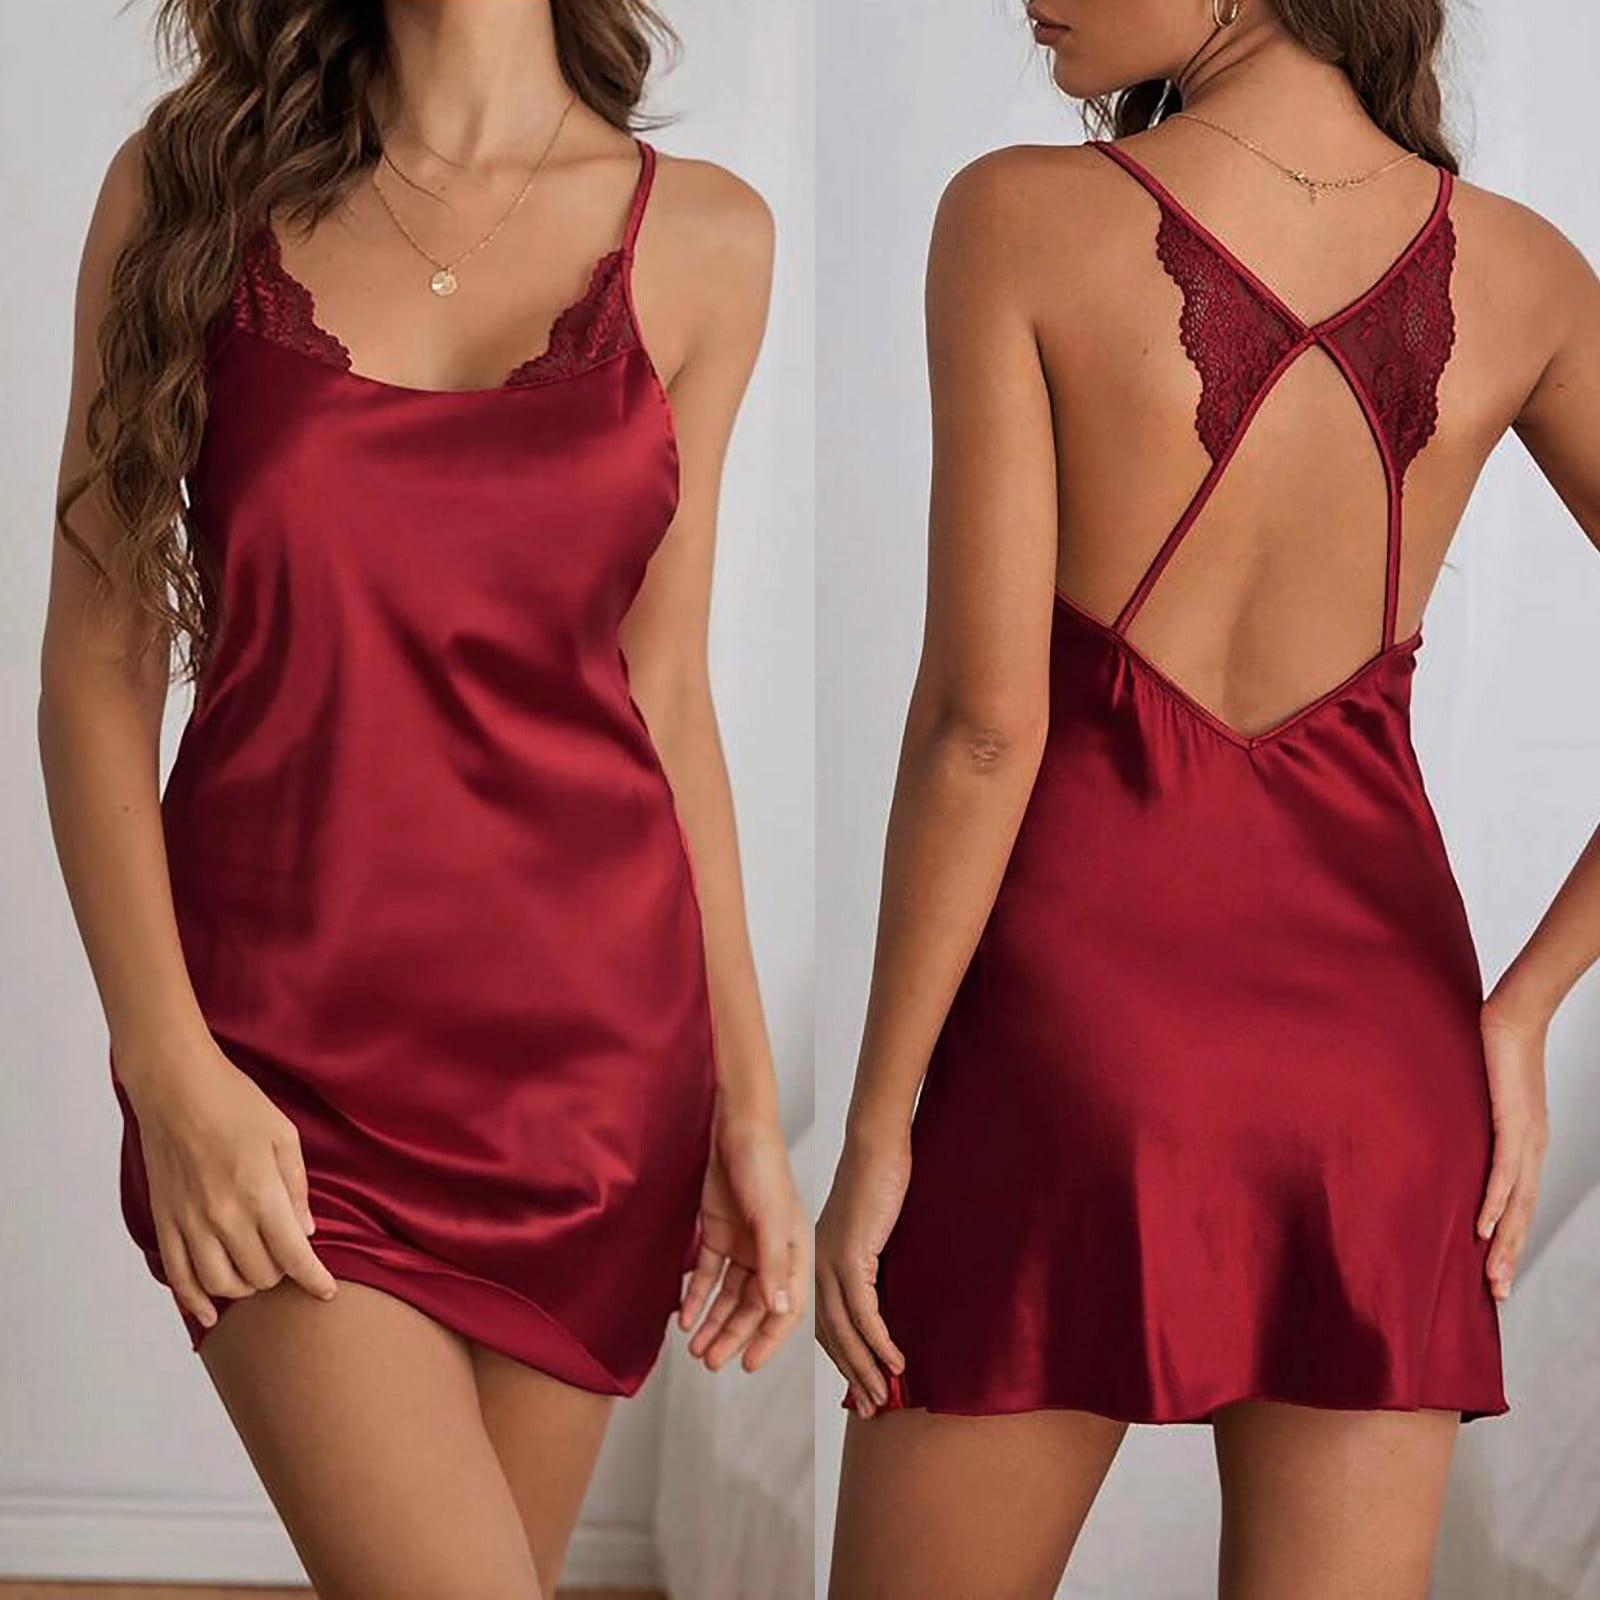 Xysaqa Lingerie for Women Satin Nightgown Lace Chemise Sleeveless Camisole  Slip Dress Babydoll Sleepwear Nightwear 